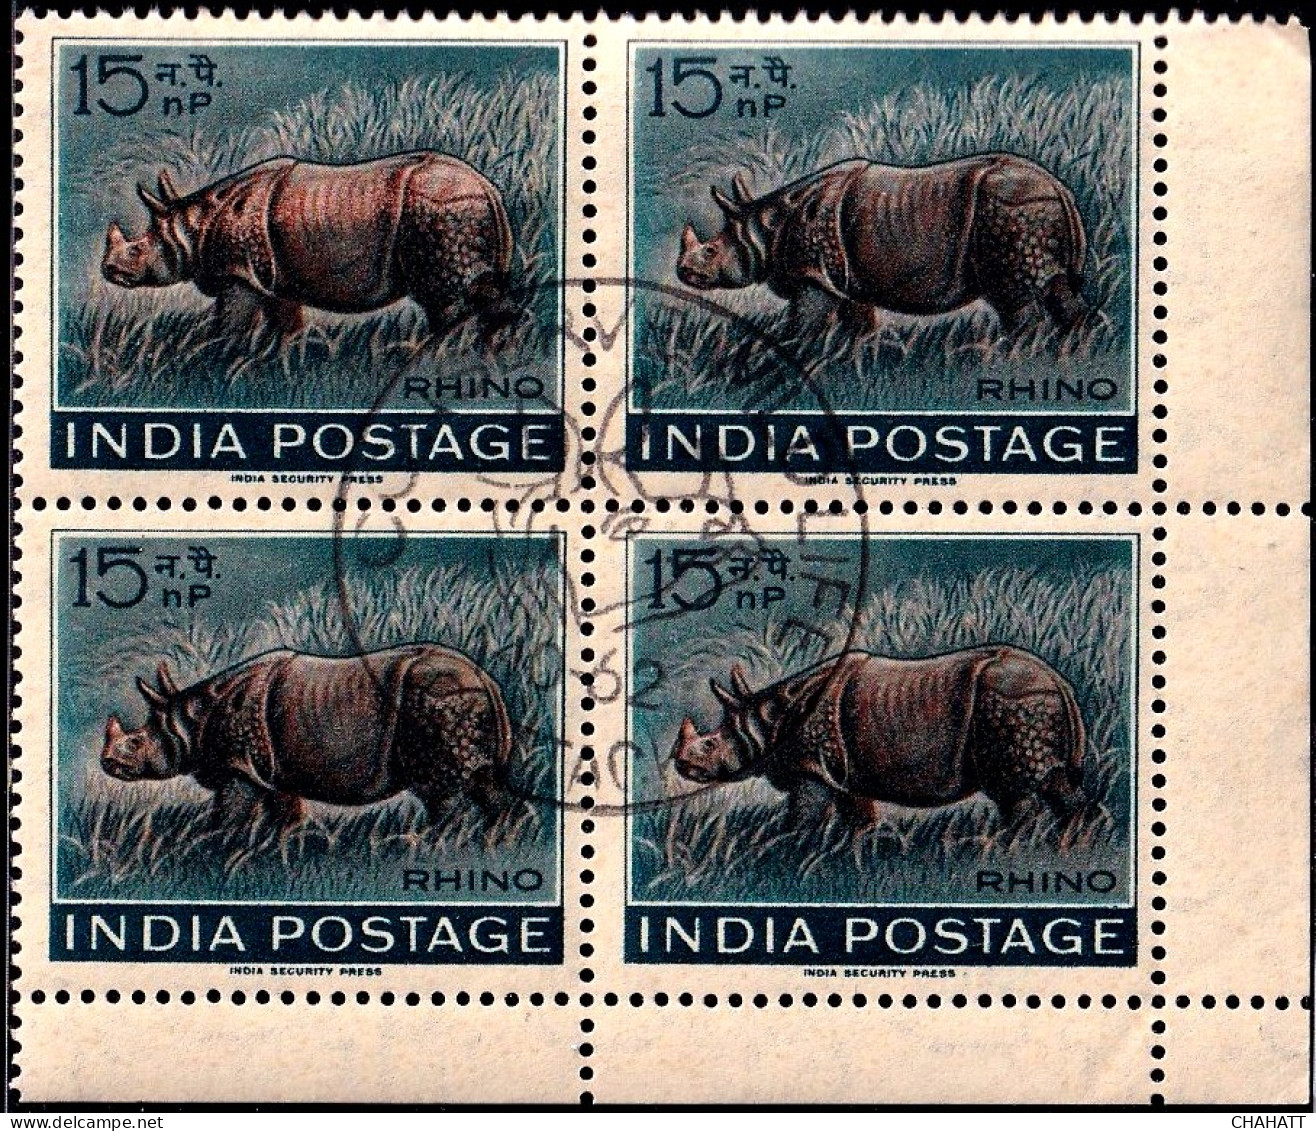 INDIA-1962- WILDLIFE WEEK- RHINOCEROS- BLOCK OF 4 WITH PICTORIAL CANCEL- ERROR-DRY PRINT-"BHARAT" OMITTED-MNH-IE-66-3 - Plaatfouten En Curiosa